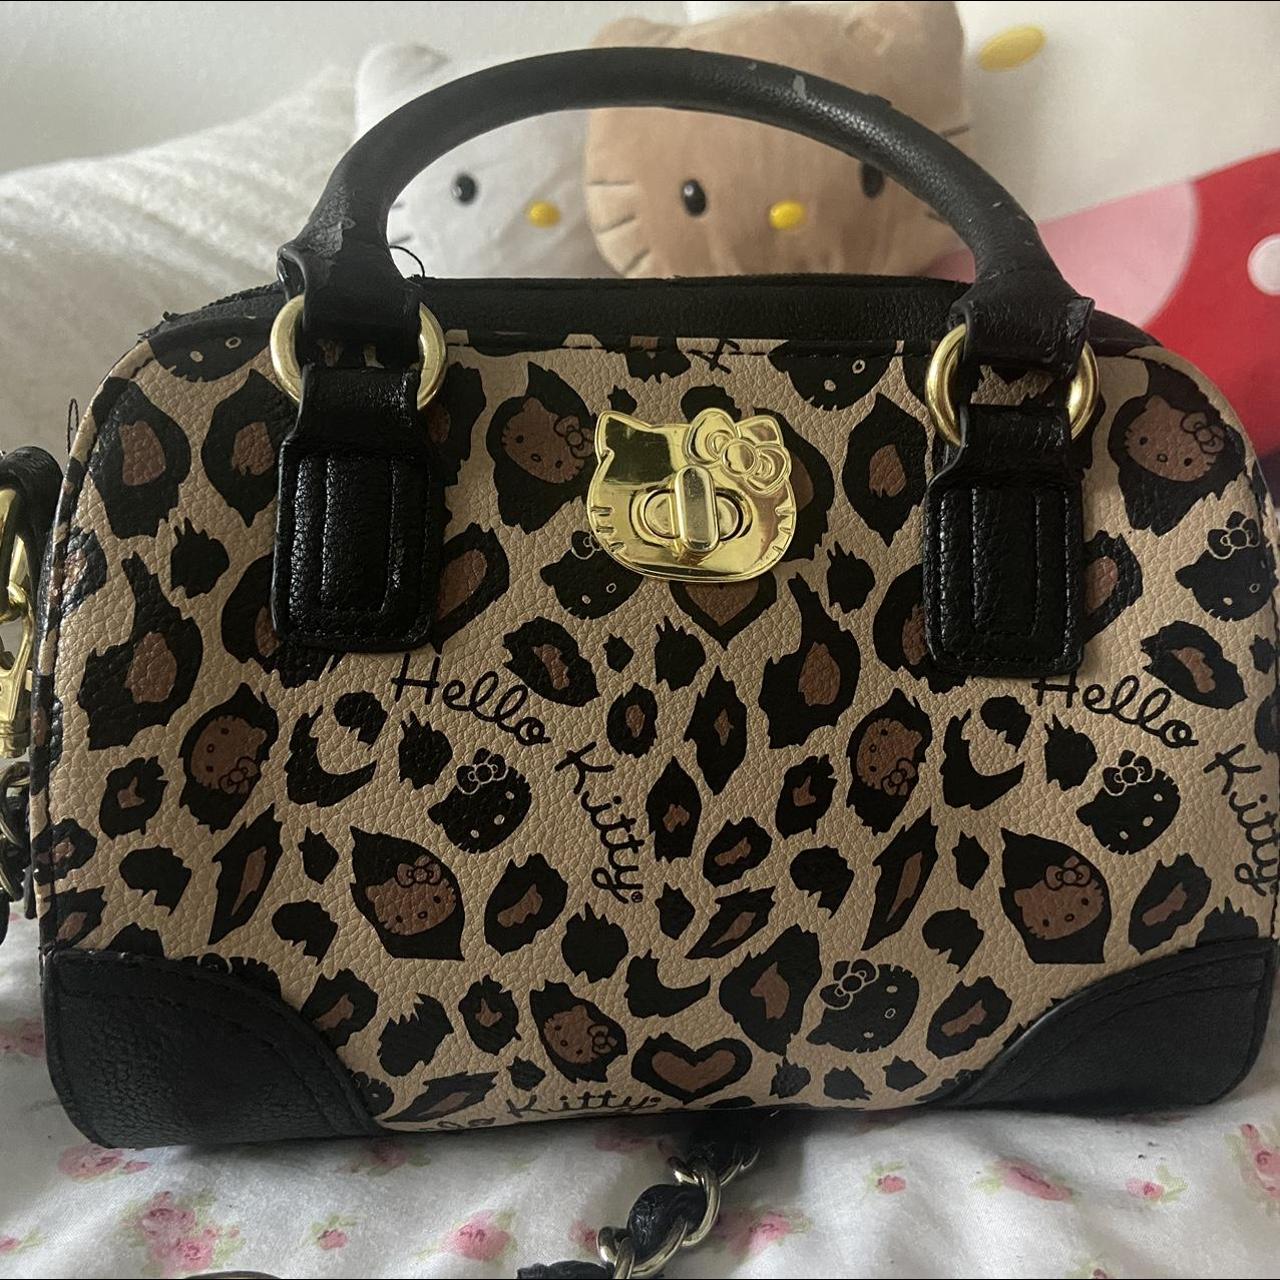 Handbags · Trends International · Online Store Powered by Storenvy | Leopard  handbag, Hello kitty handbags, Leopard print handbags